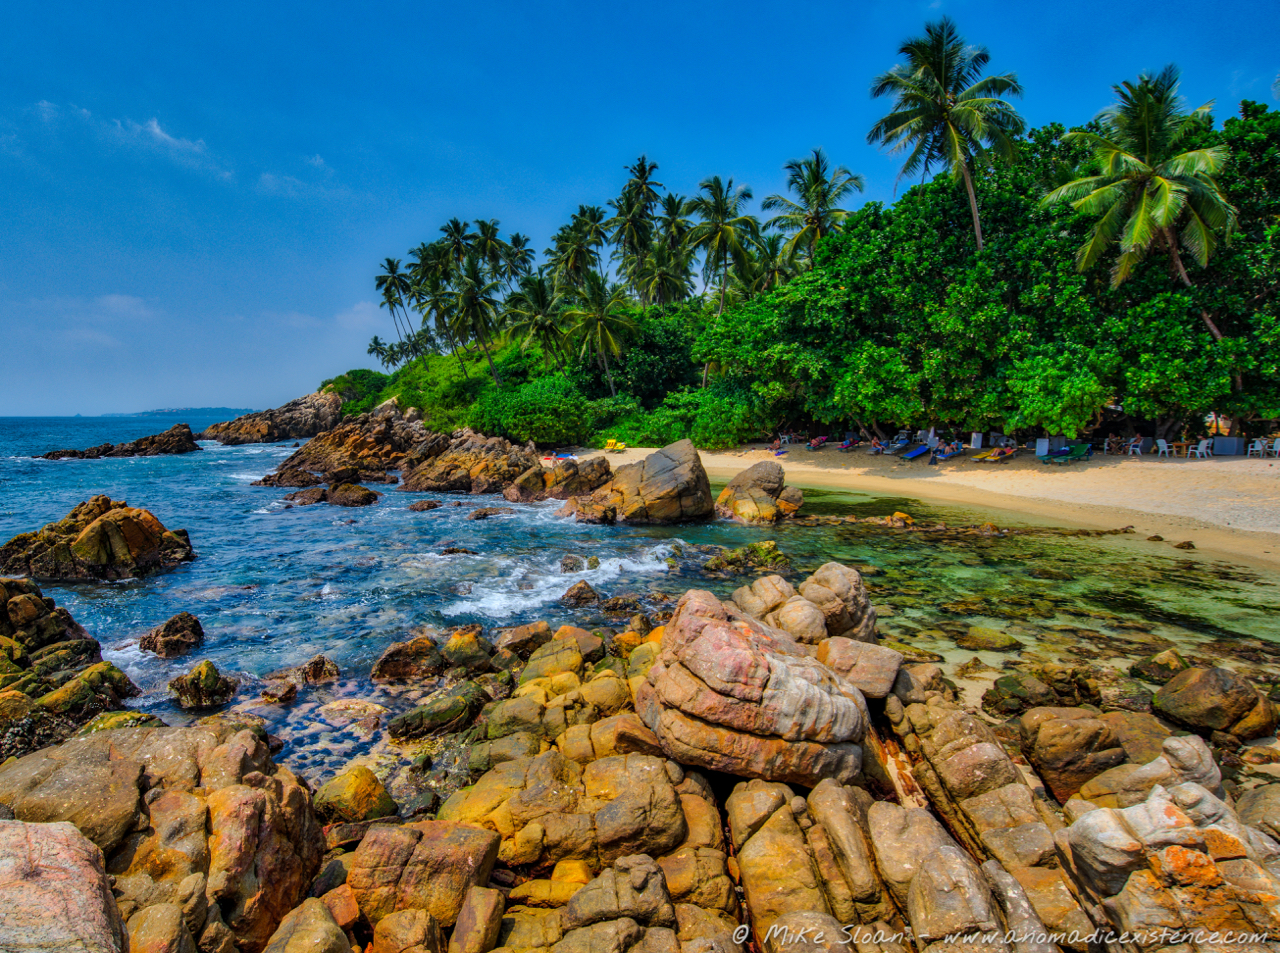 Шри ланка в январе. Пляж Мирисса Шри Ланка. Пляж Милиссы Шри Ланка. Сикрет Бич Шри Ланка. Сикрет Бич Мирисса.